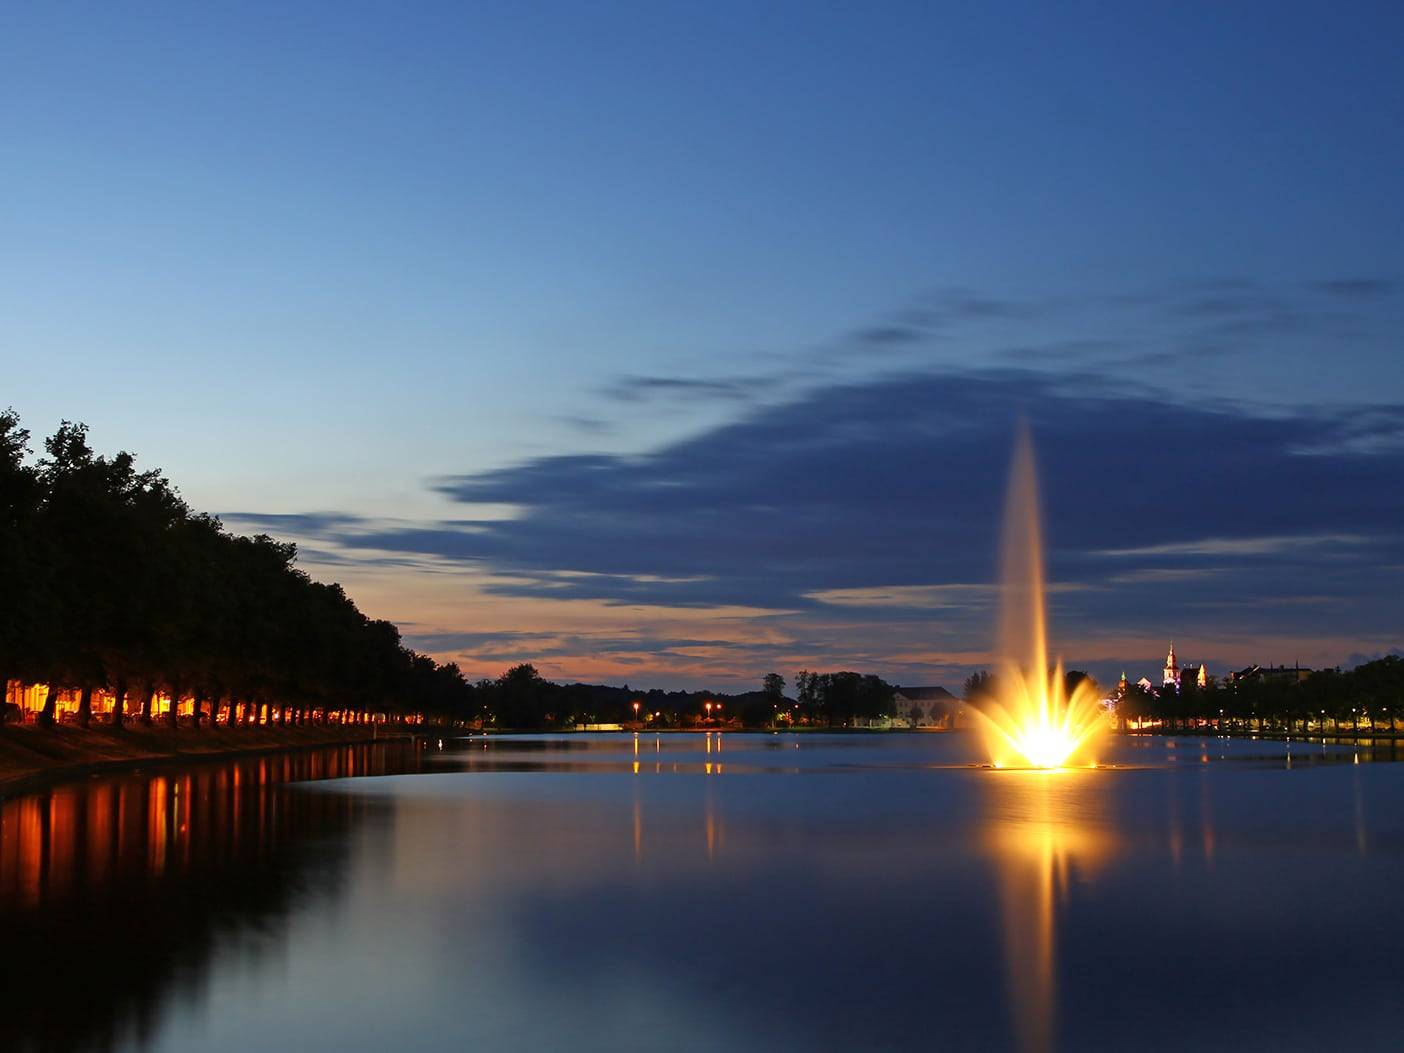 Panoramic view of Pfaffenteich lake and Schwerin city at evening, Mecklenburg-Vorpommern region, Germany